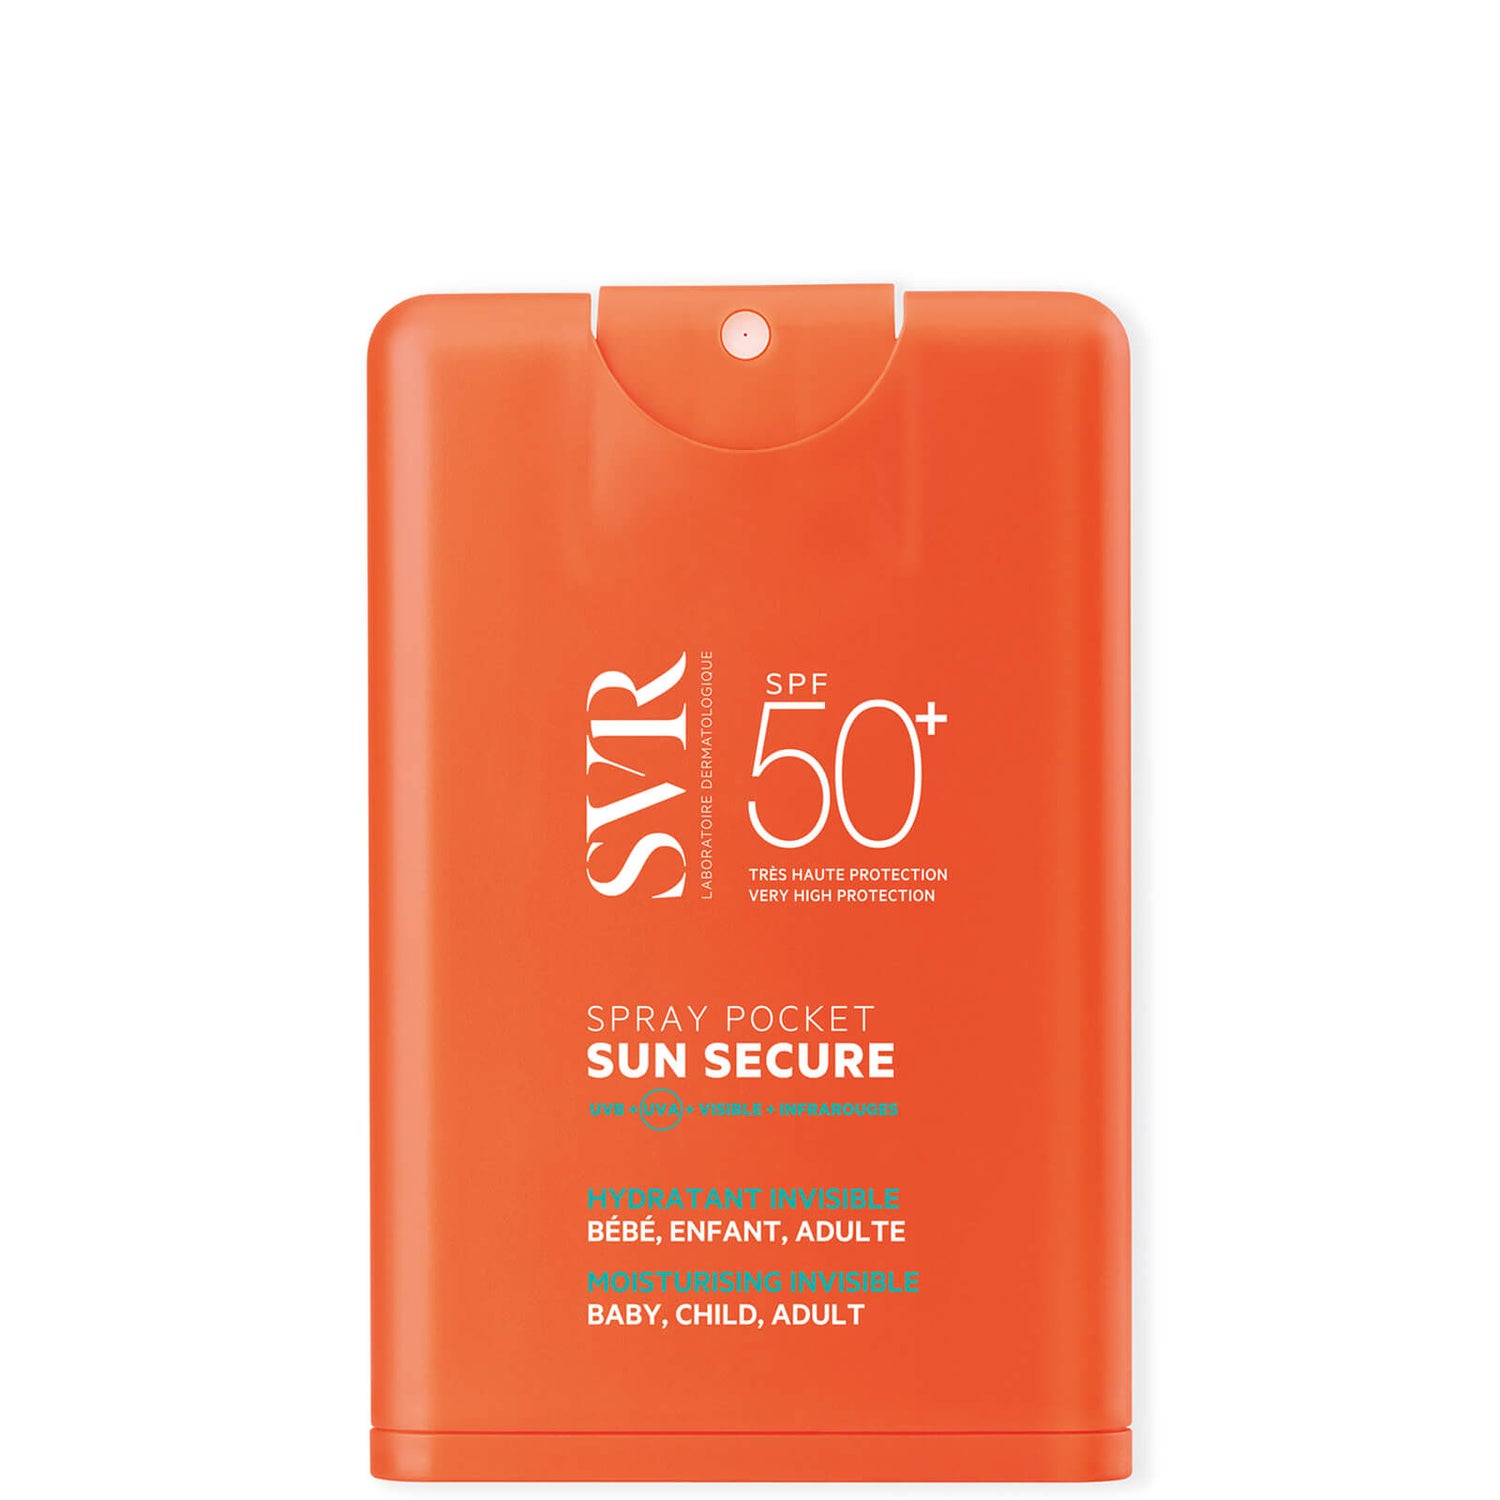 SVR Sun Secure Pocket Spray Daily Use SPF50+ 20g